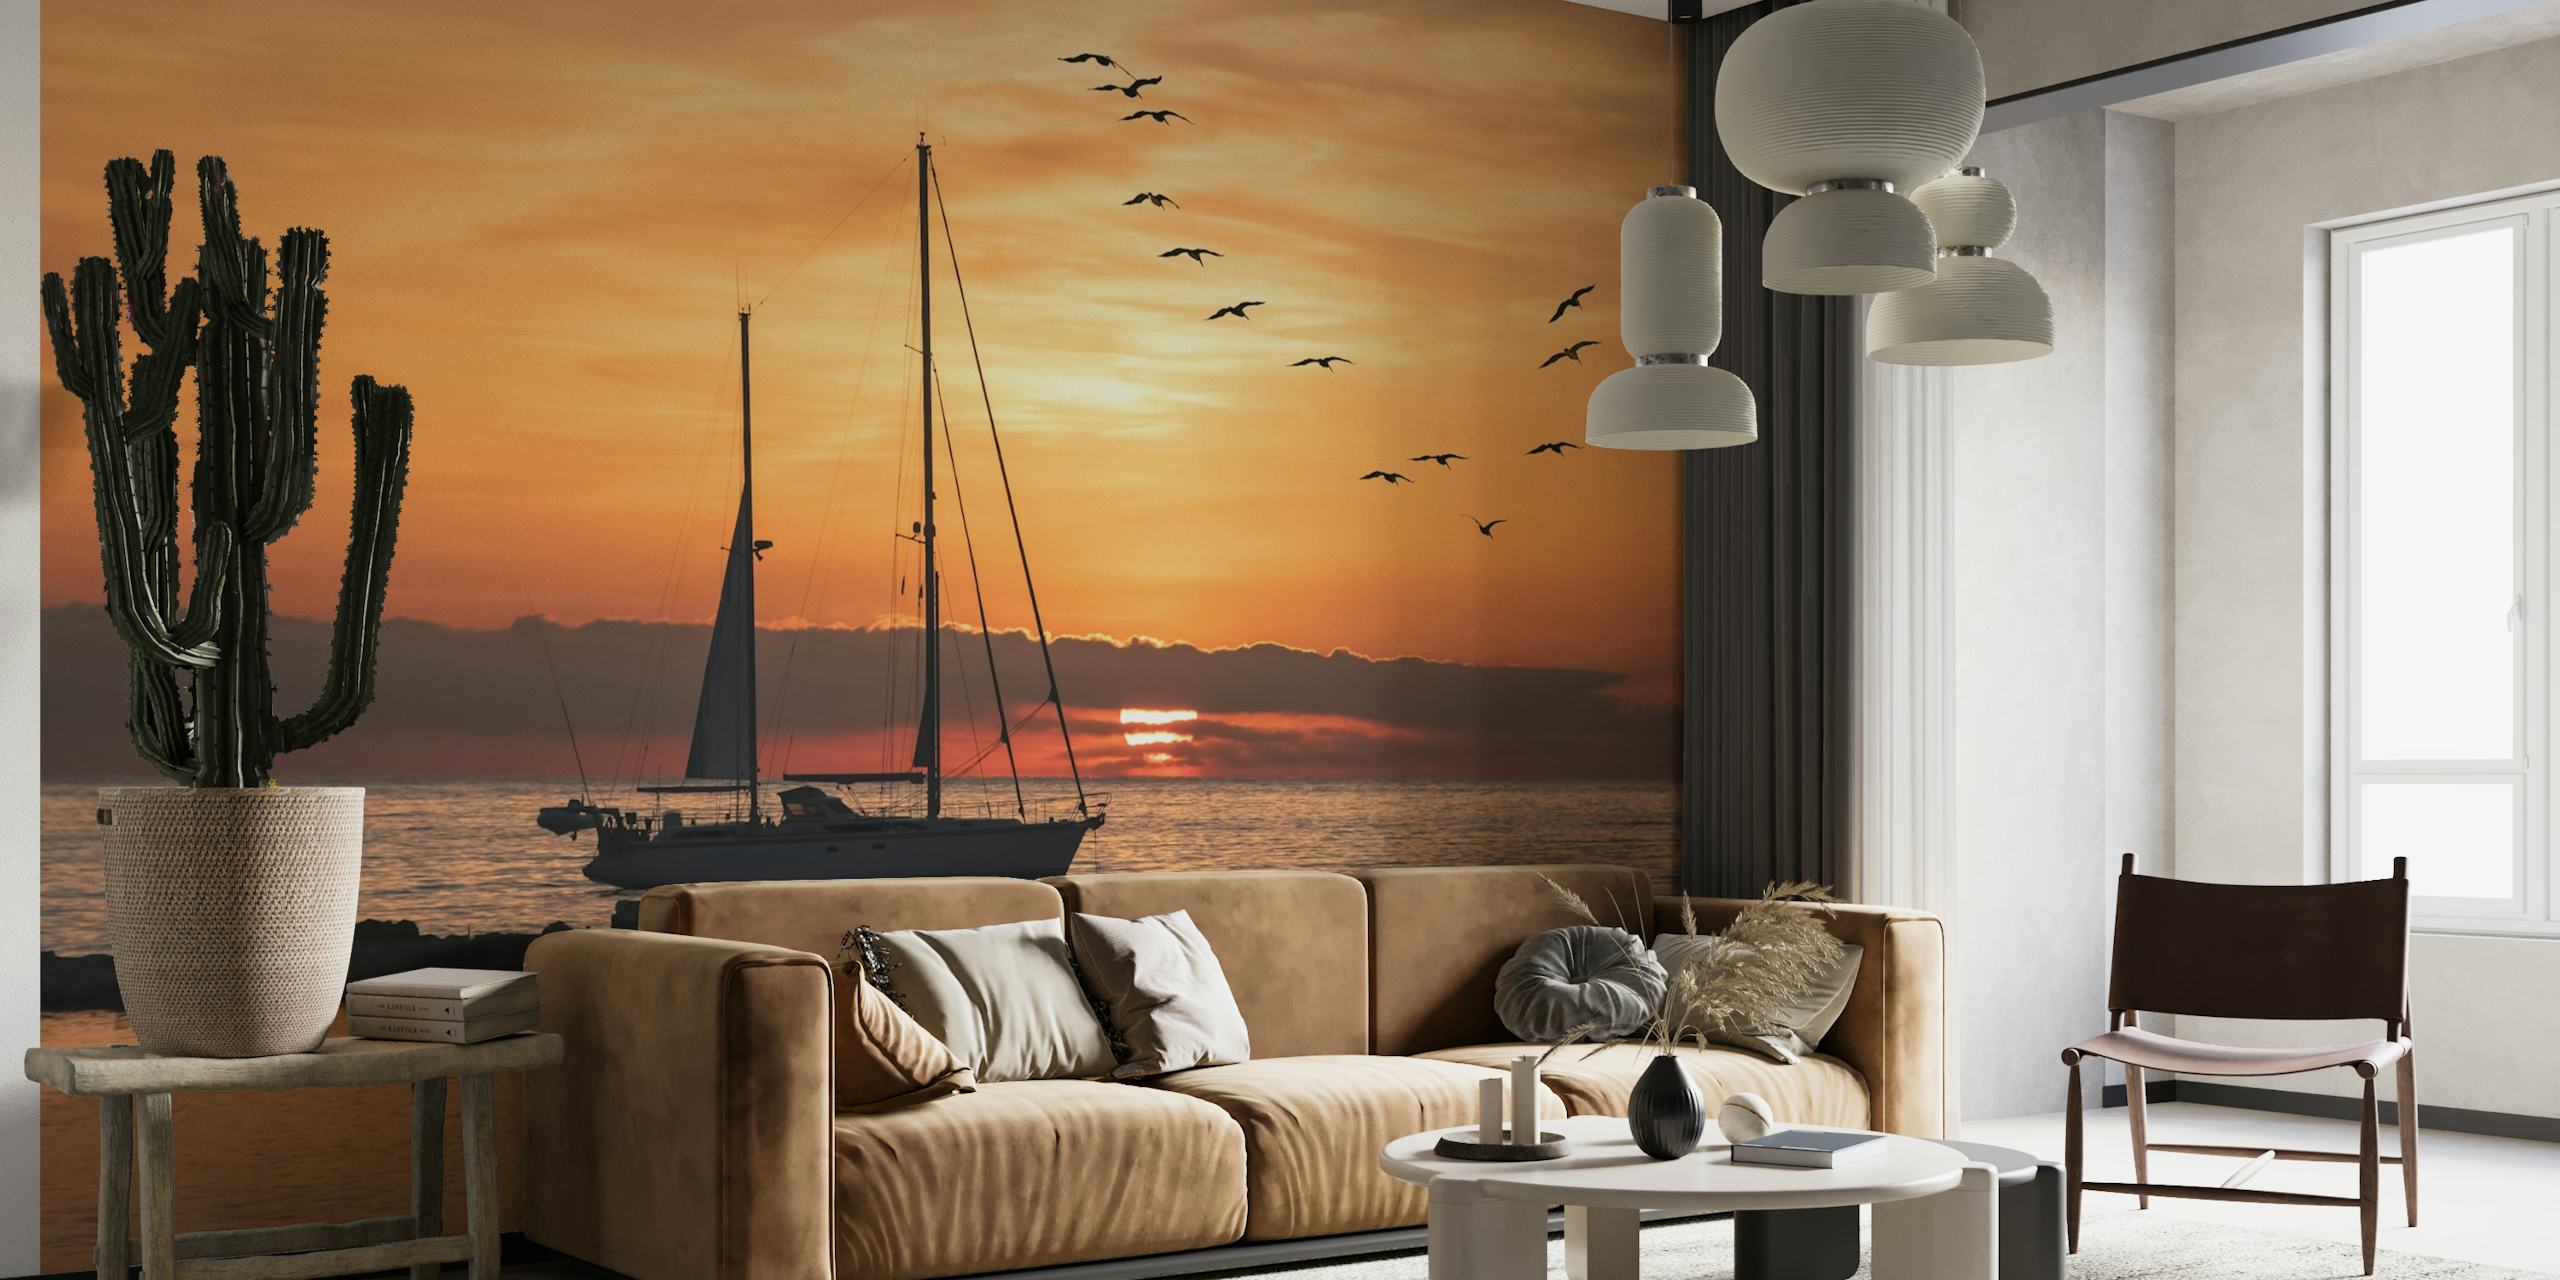 Fototapete Meerblick Segelboot-Silhouette vor Sonnenuntergangskulisse mit fliegenden Vögeln